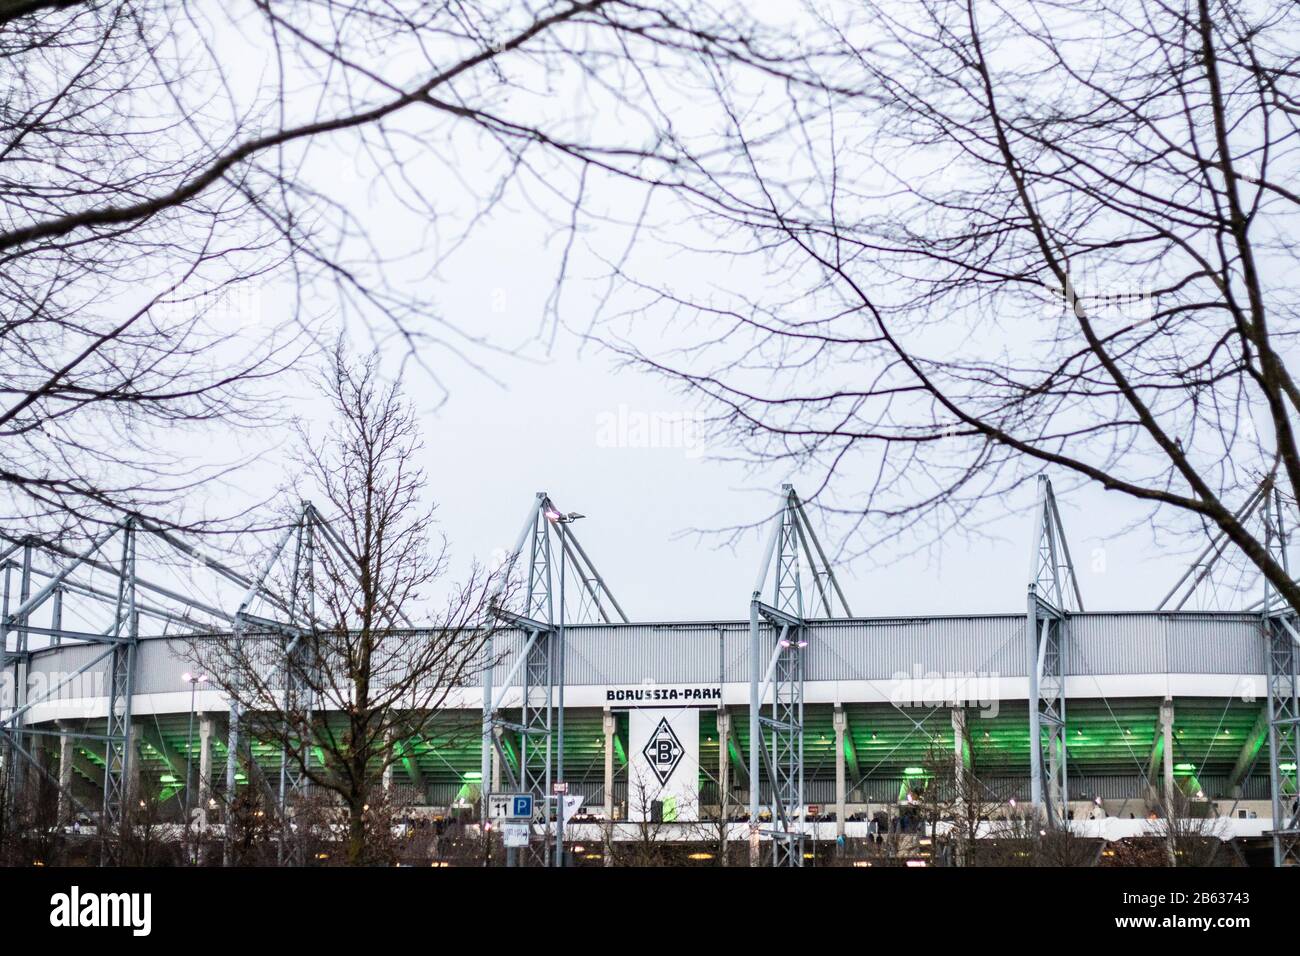 Mönchengladbach, Germany, Borussiapark, 7.03.2020: Overview about the stadium during the Bundesliga match Borussia M’gladbach vs. Borussia Dortmund in Stock Photo